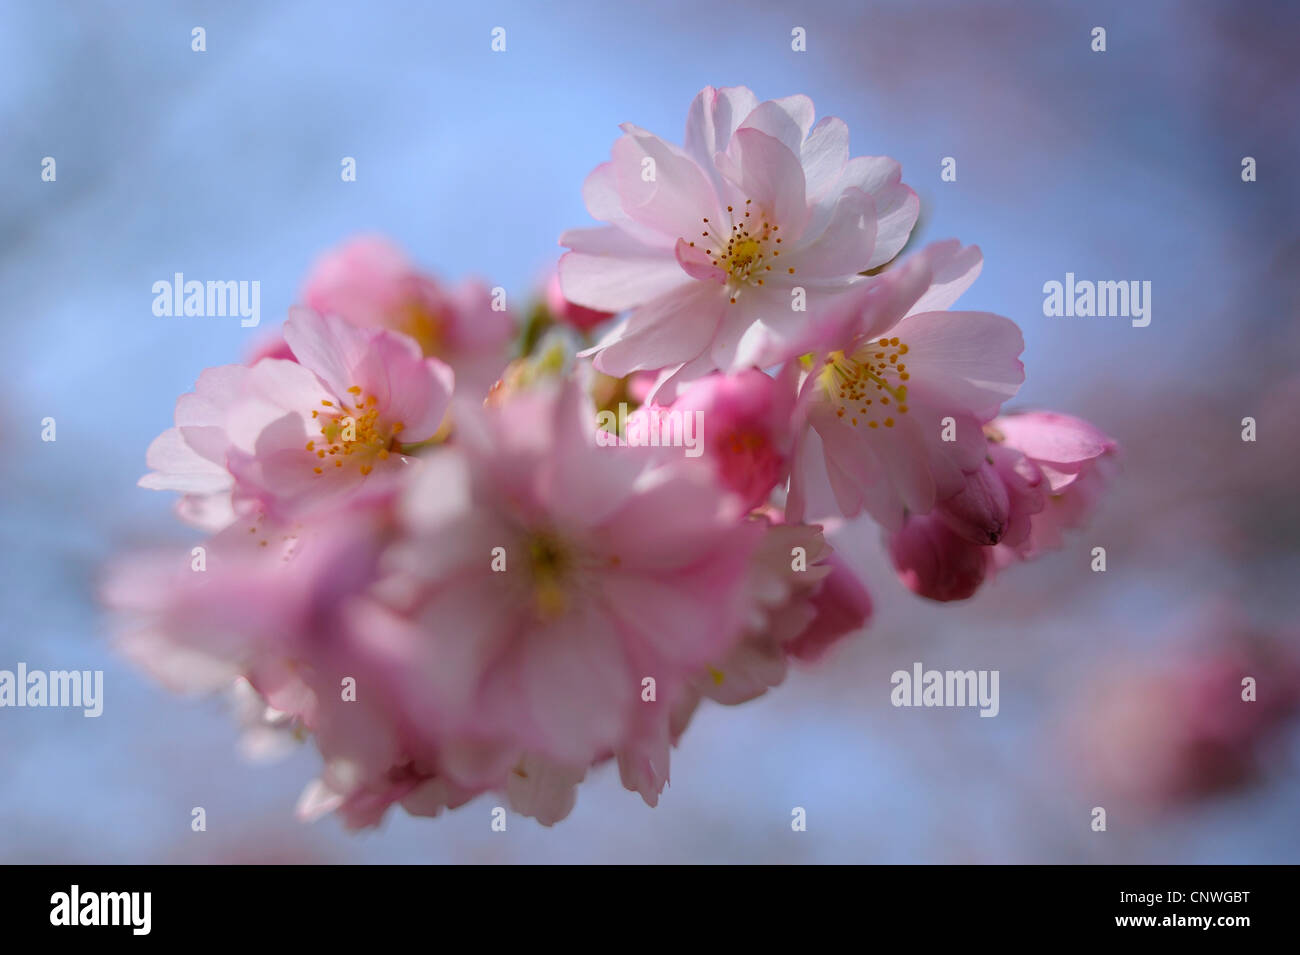 cherry flowers of an ornamental cherry tree Stock Photo